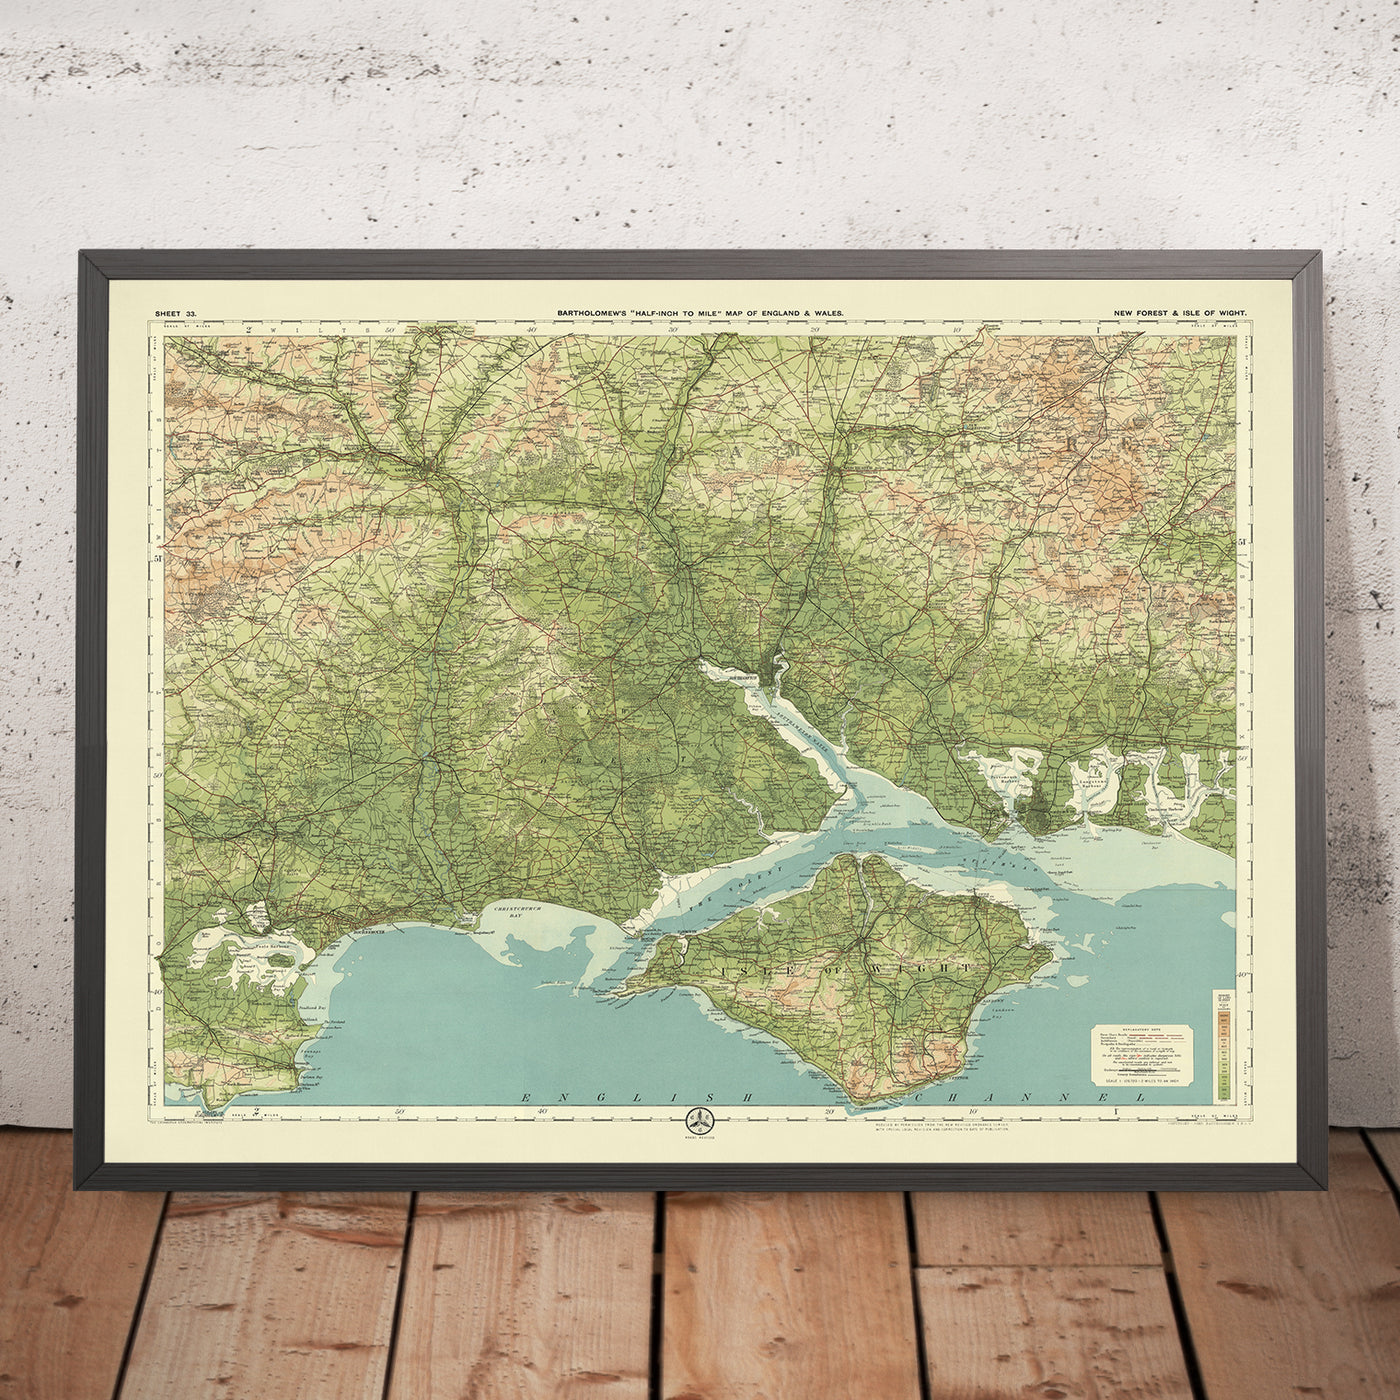 Antiguo mapa OS de New Forest y la Isla de Wight, Hampshire por Bartholomew, 1901: Southampton, Bournemouth, New Forest, Isla de Wight, Castillo de Carisbrooke, Needles Rocks